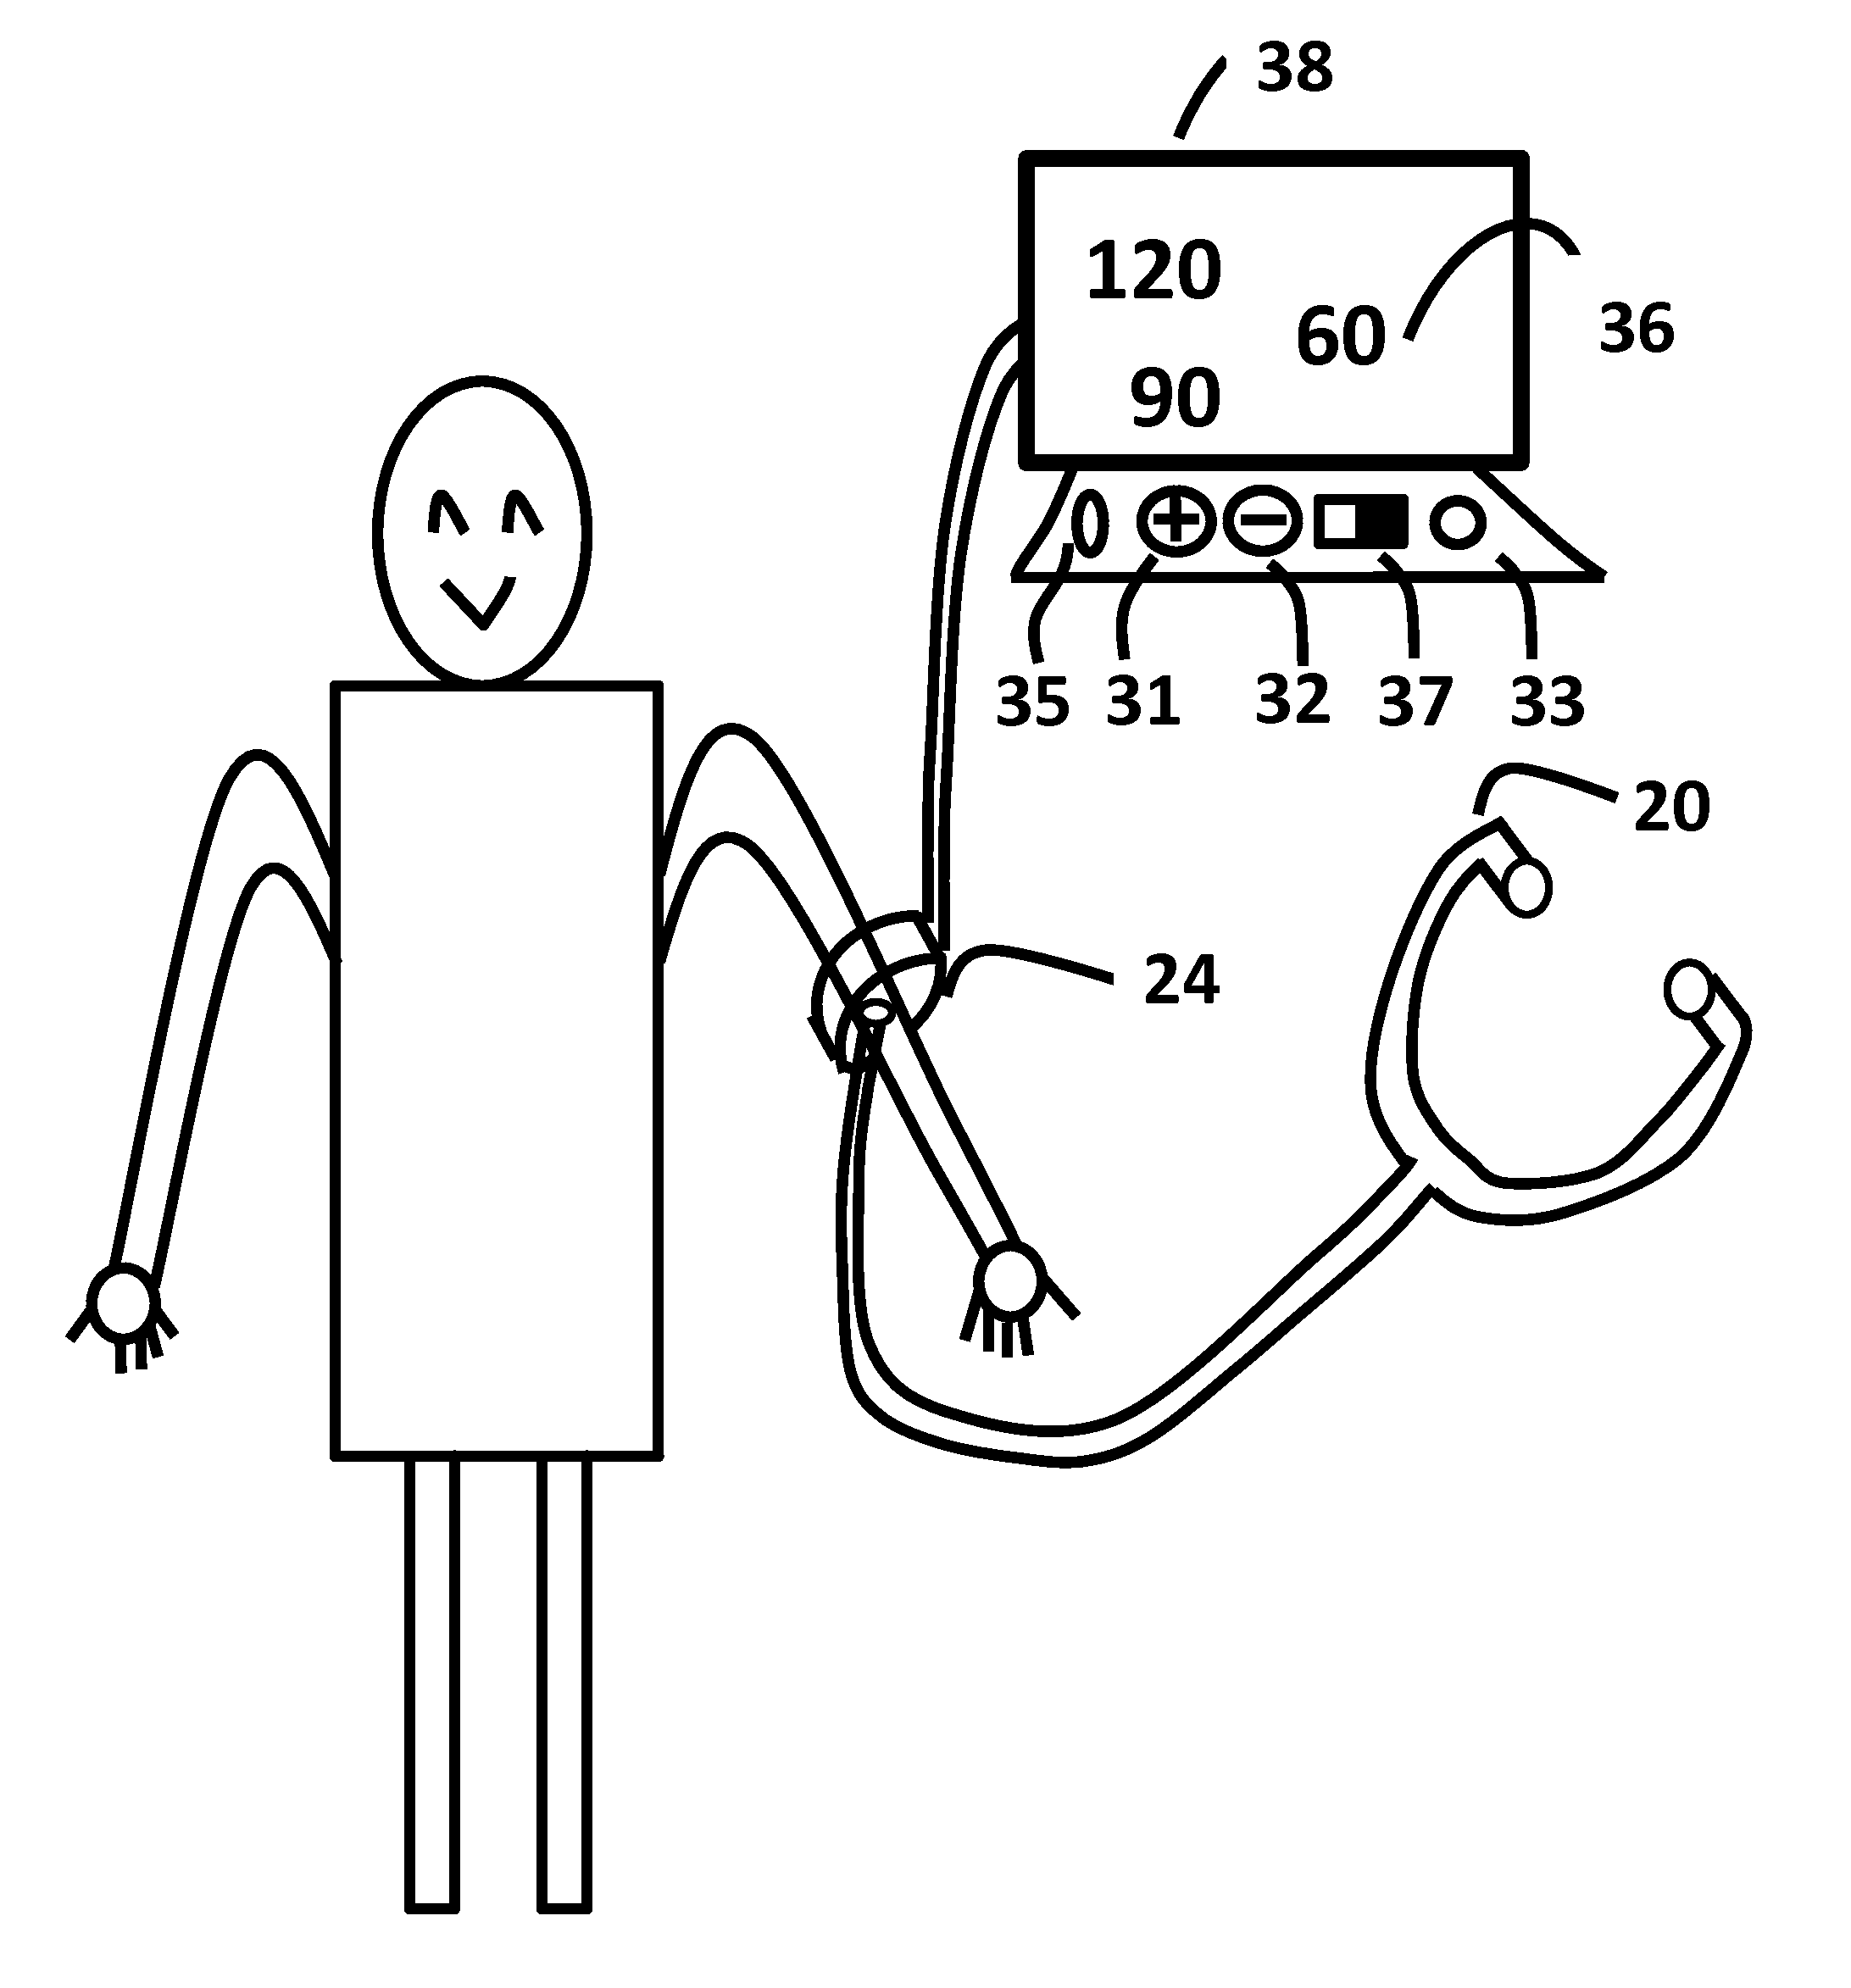 Apparatus and calibration method for blood pressure measurement